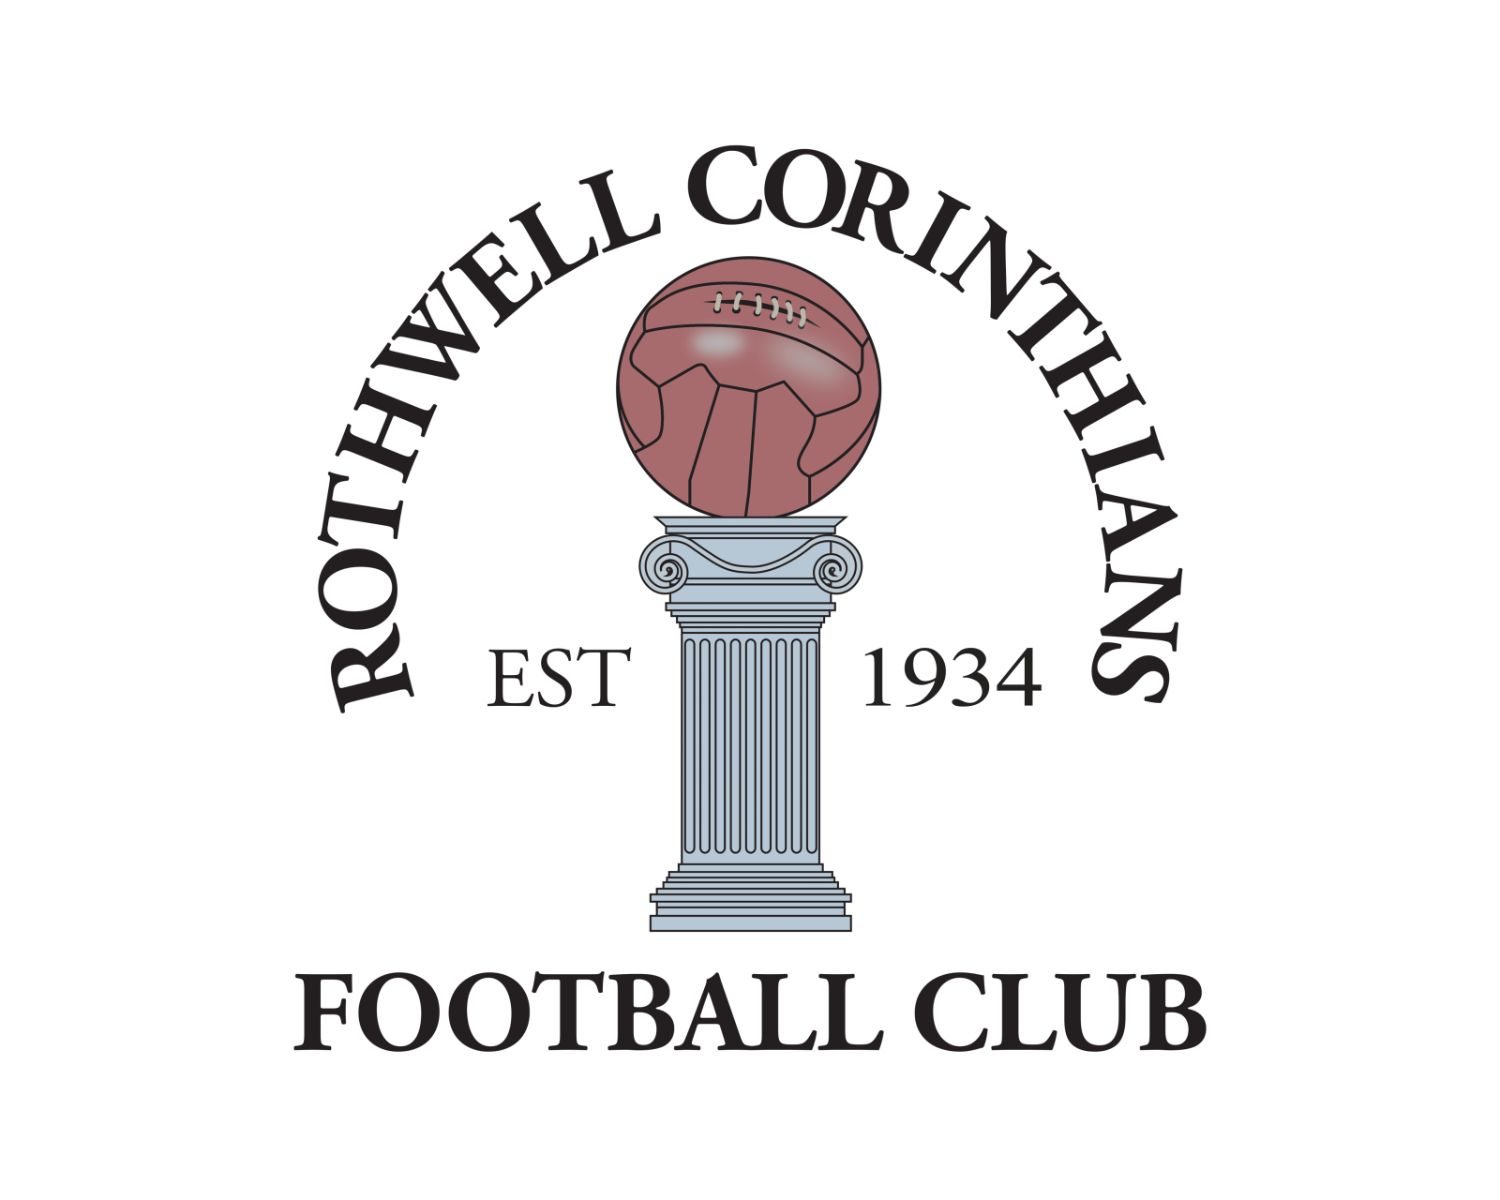 rothwell-corinthians-fc-17-football-club-facts